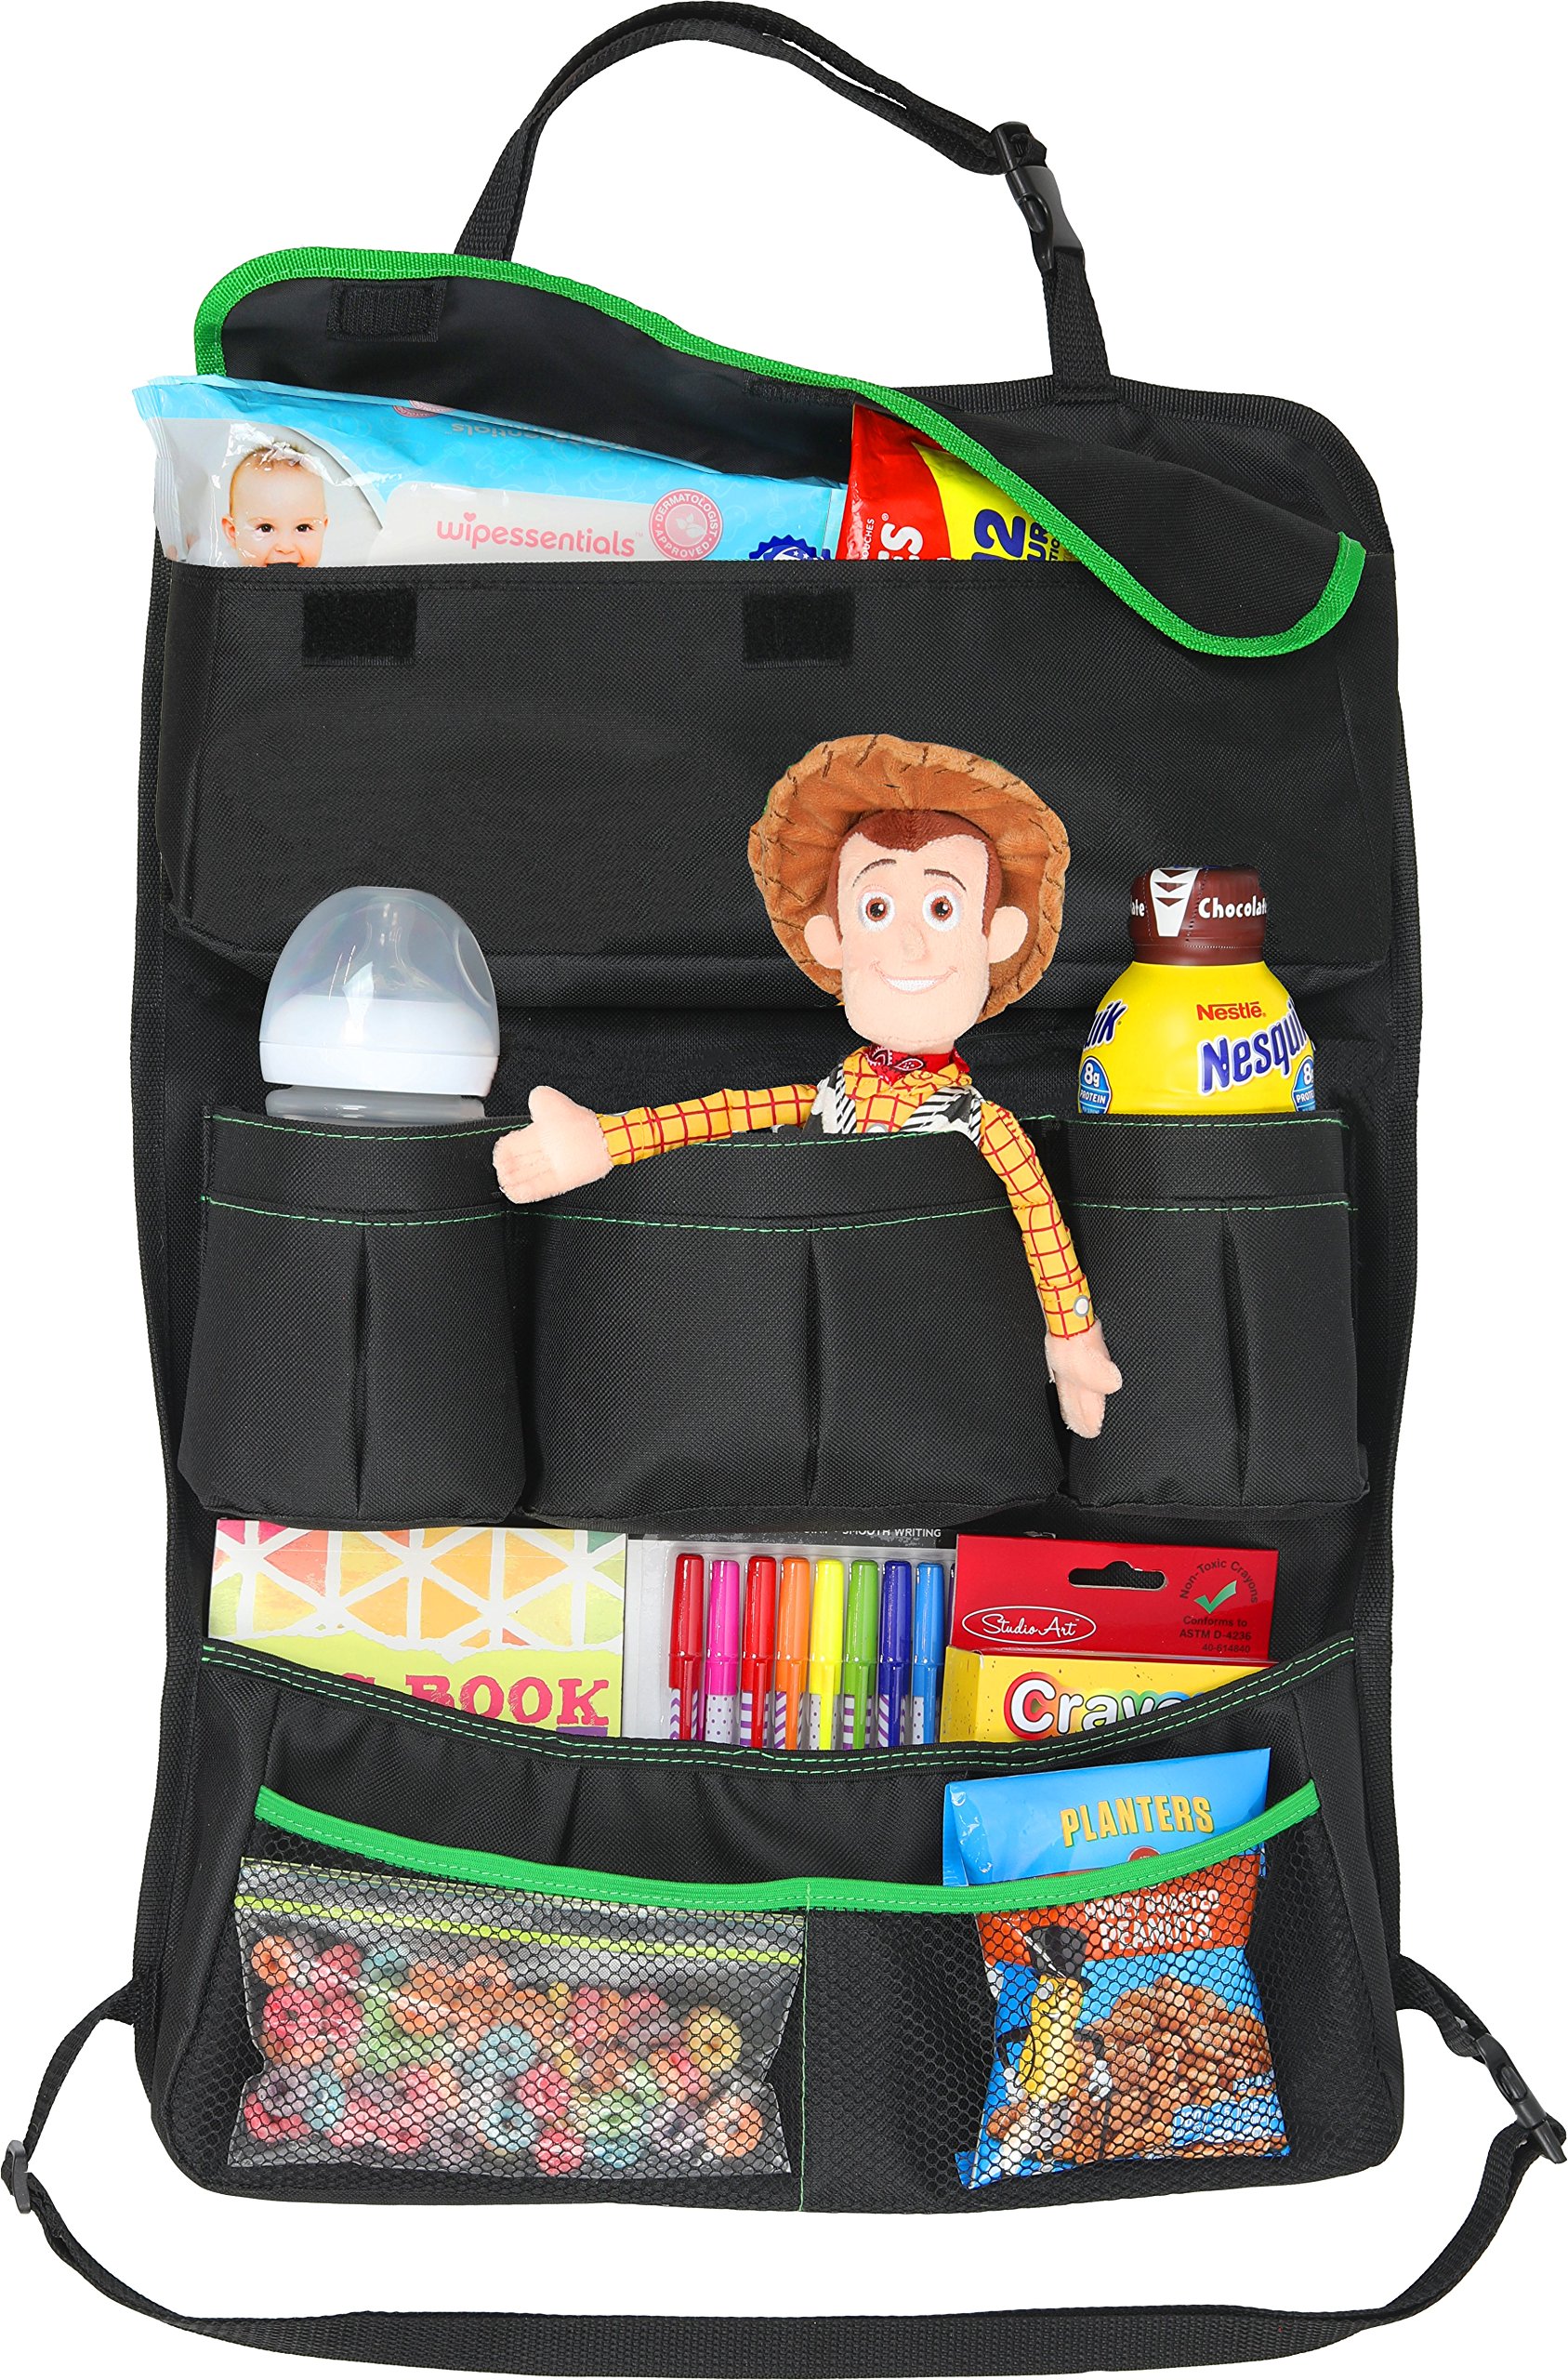 EPAuto Premium Car Backseat Organizer for Baby Travel Accessories, Kids Toy Storage, Back Seat Protector / Kick Mat… - image 1 of 3